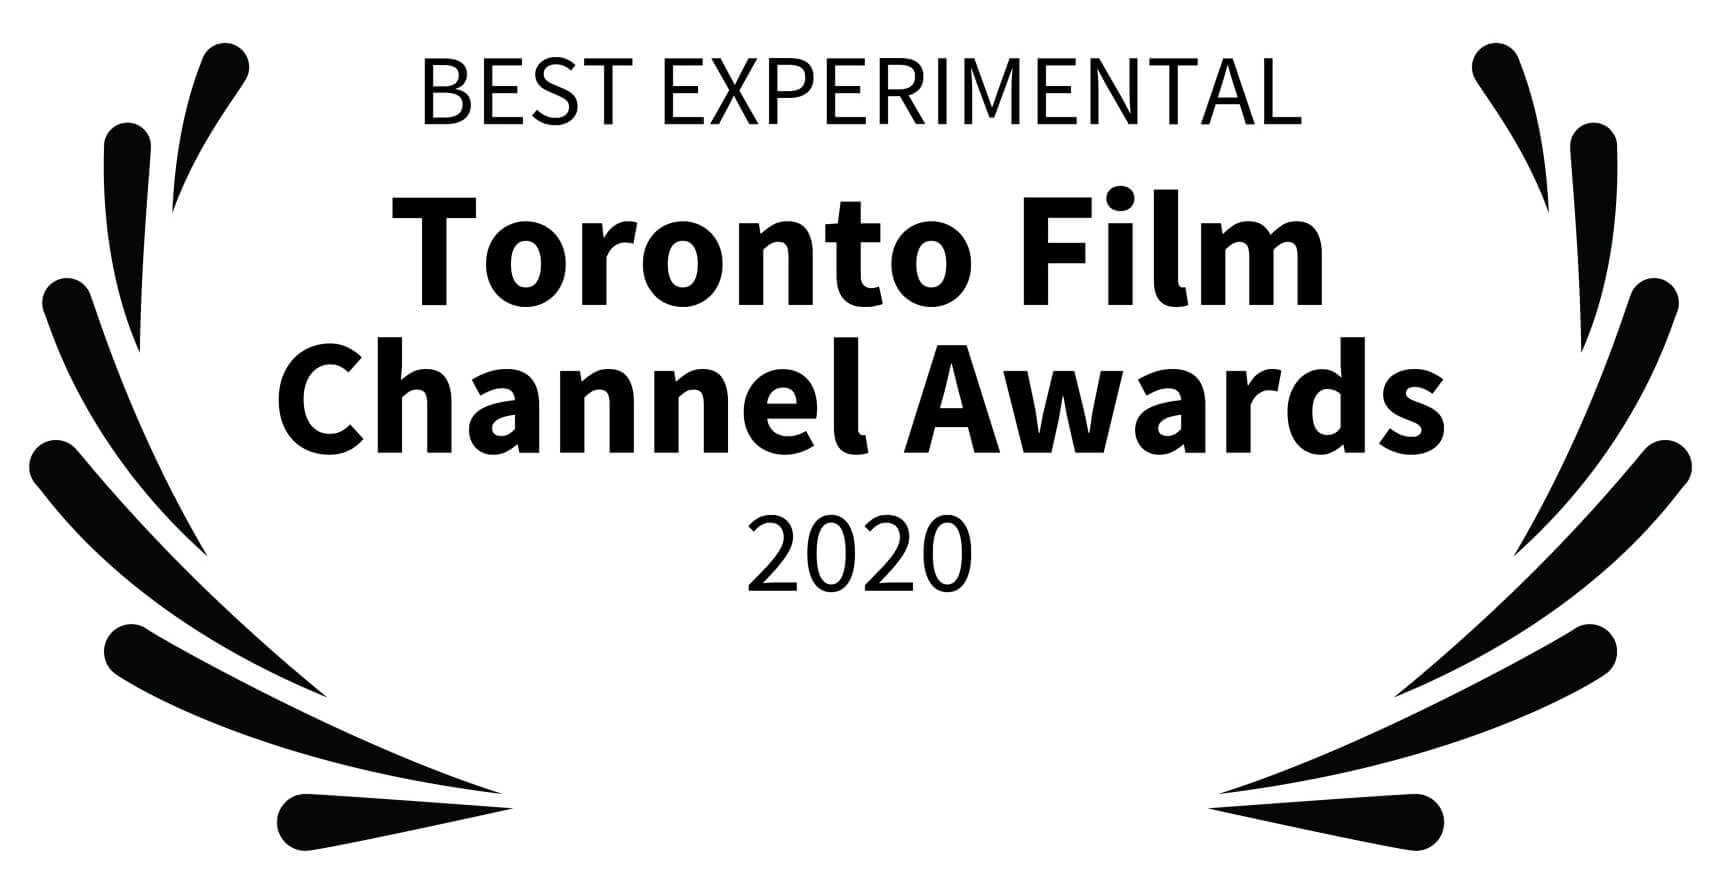 BEST EXPERIMENTAL Toronto Film Channel Awards 2020